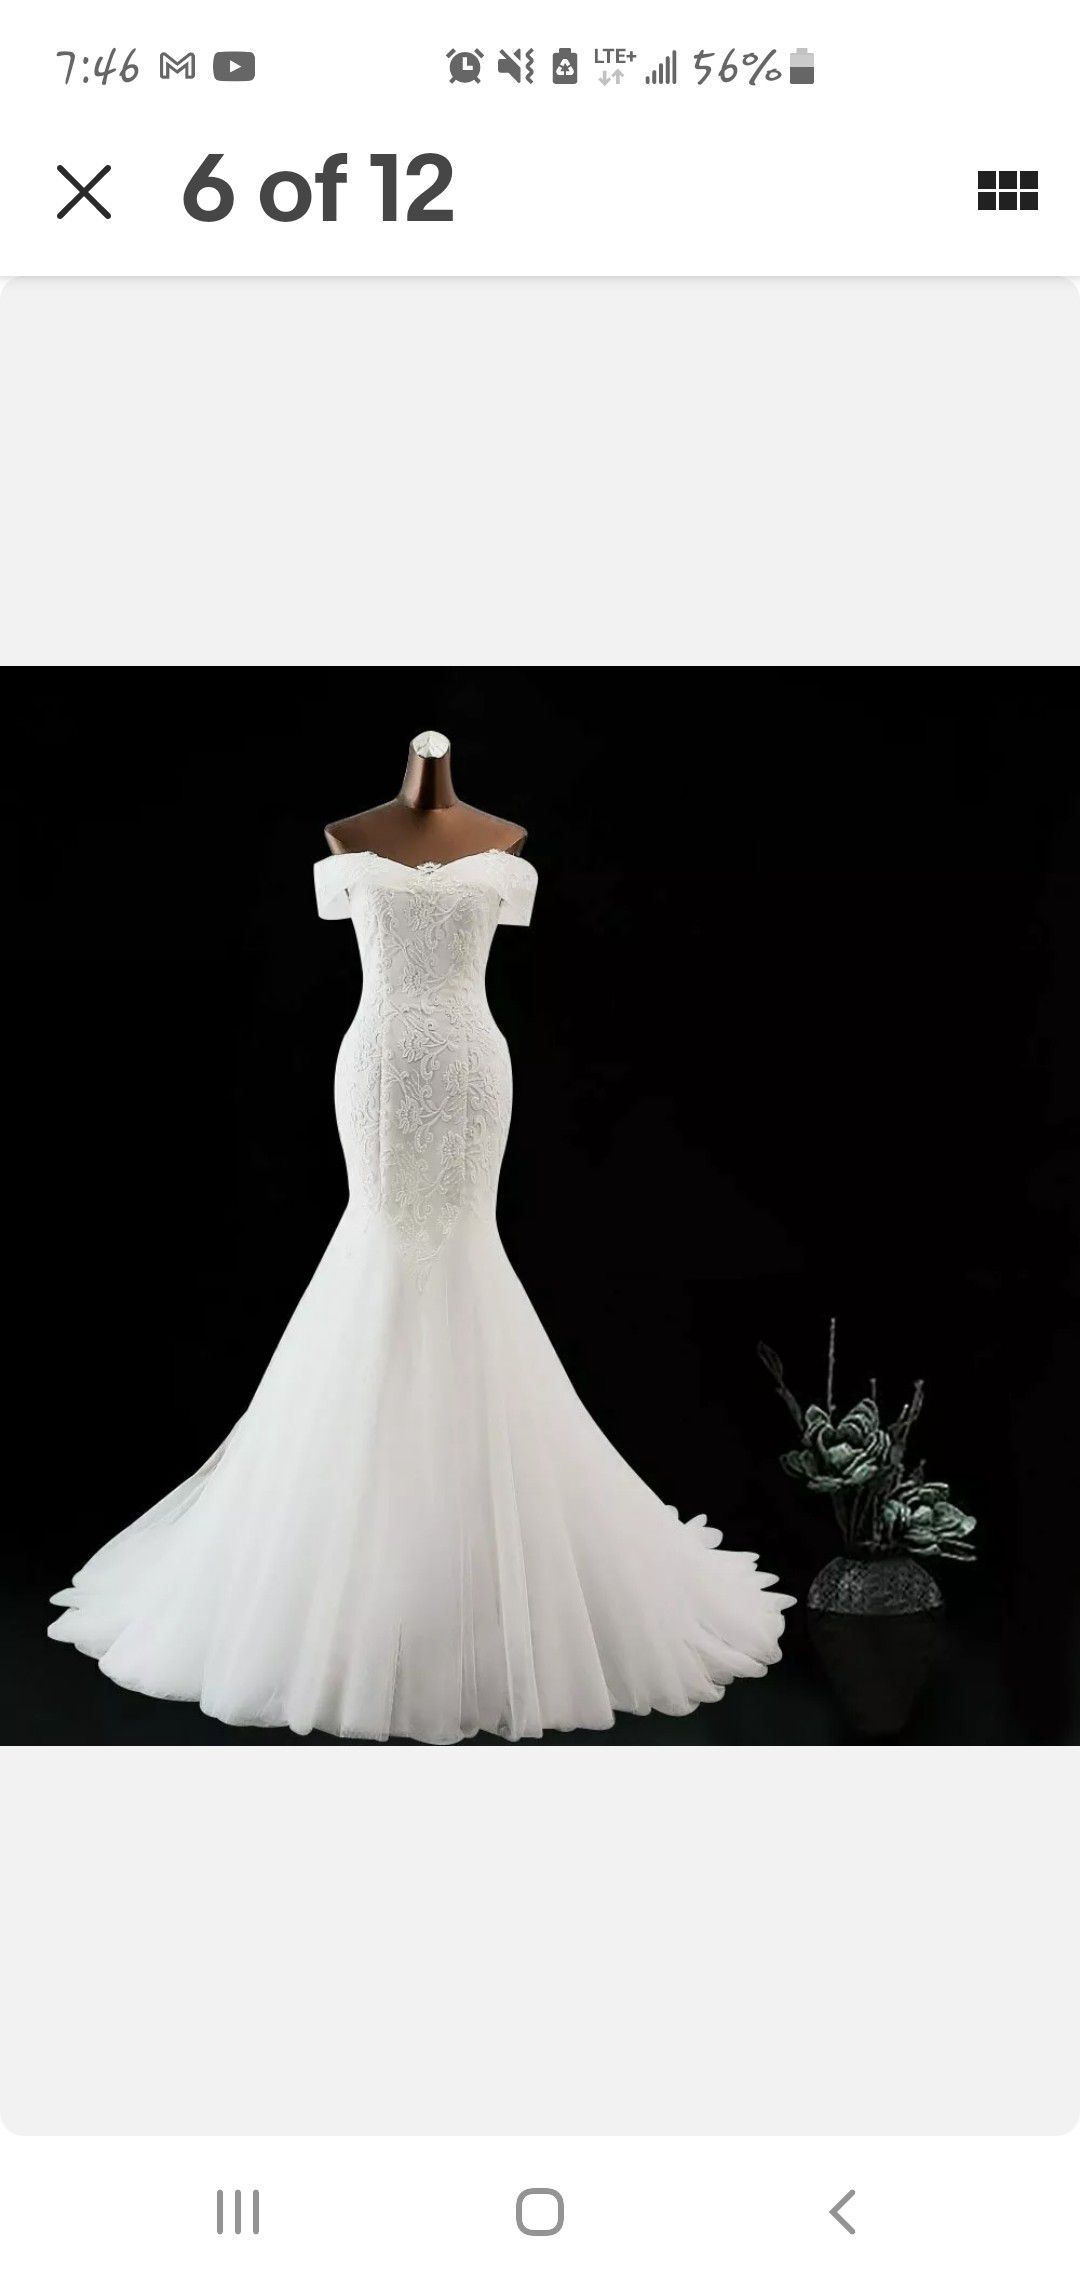 Bride dress/wedding dress